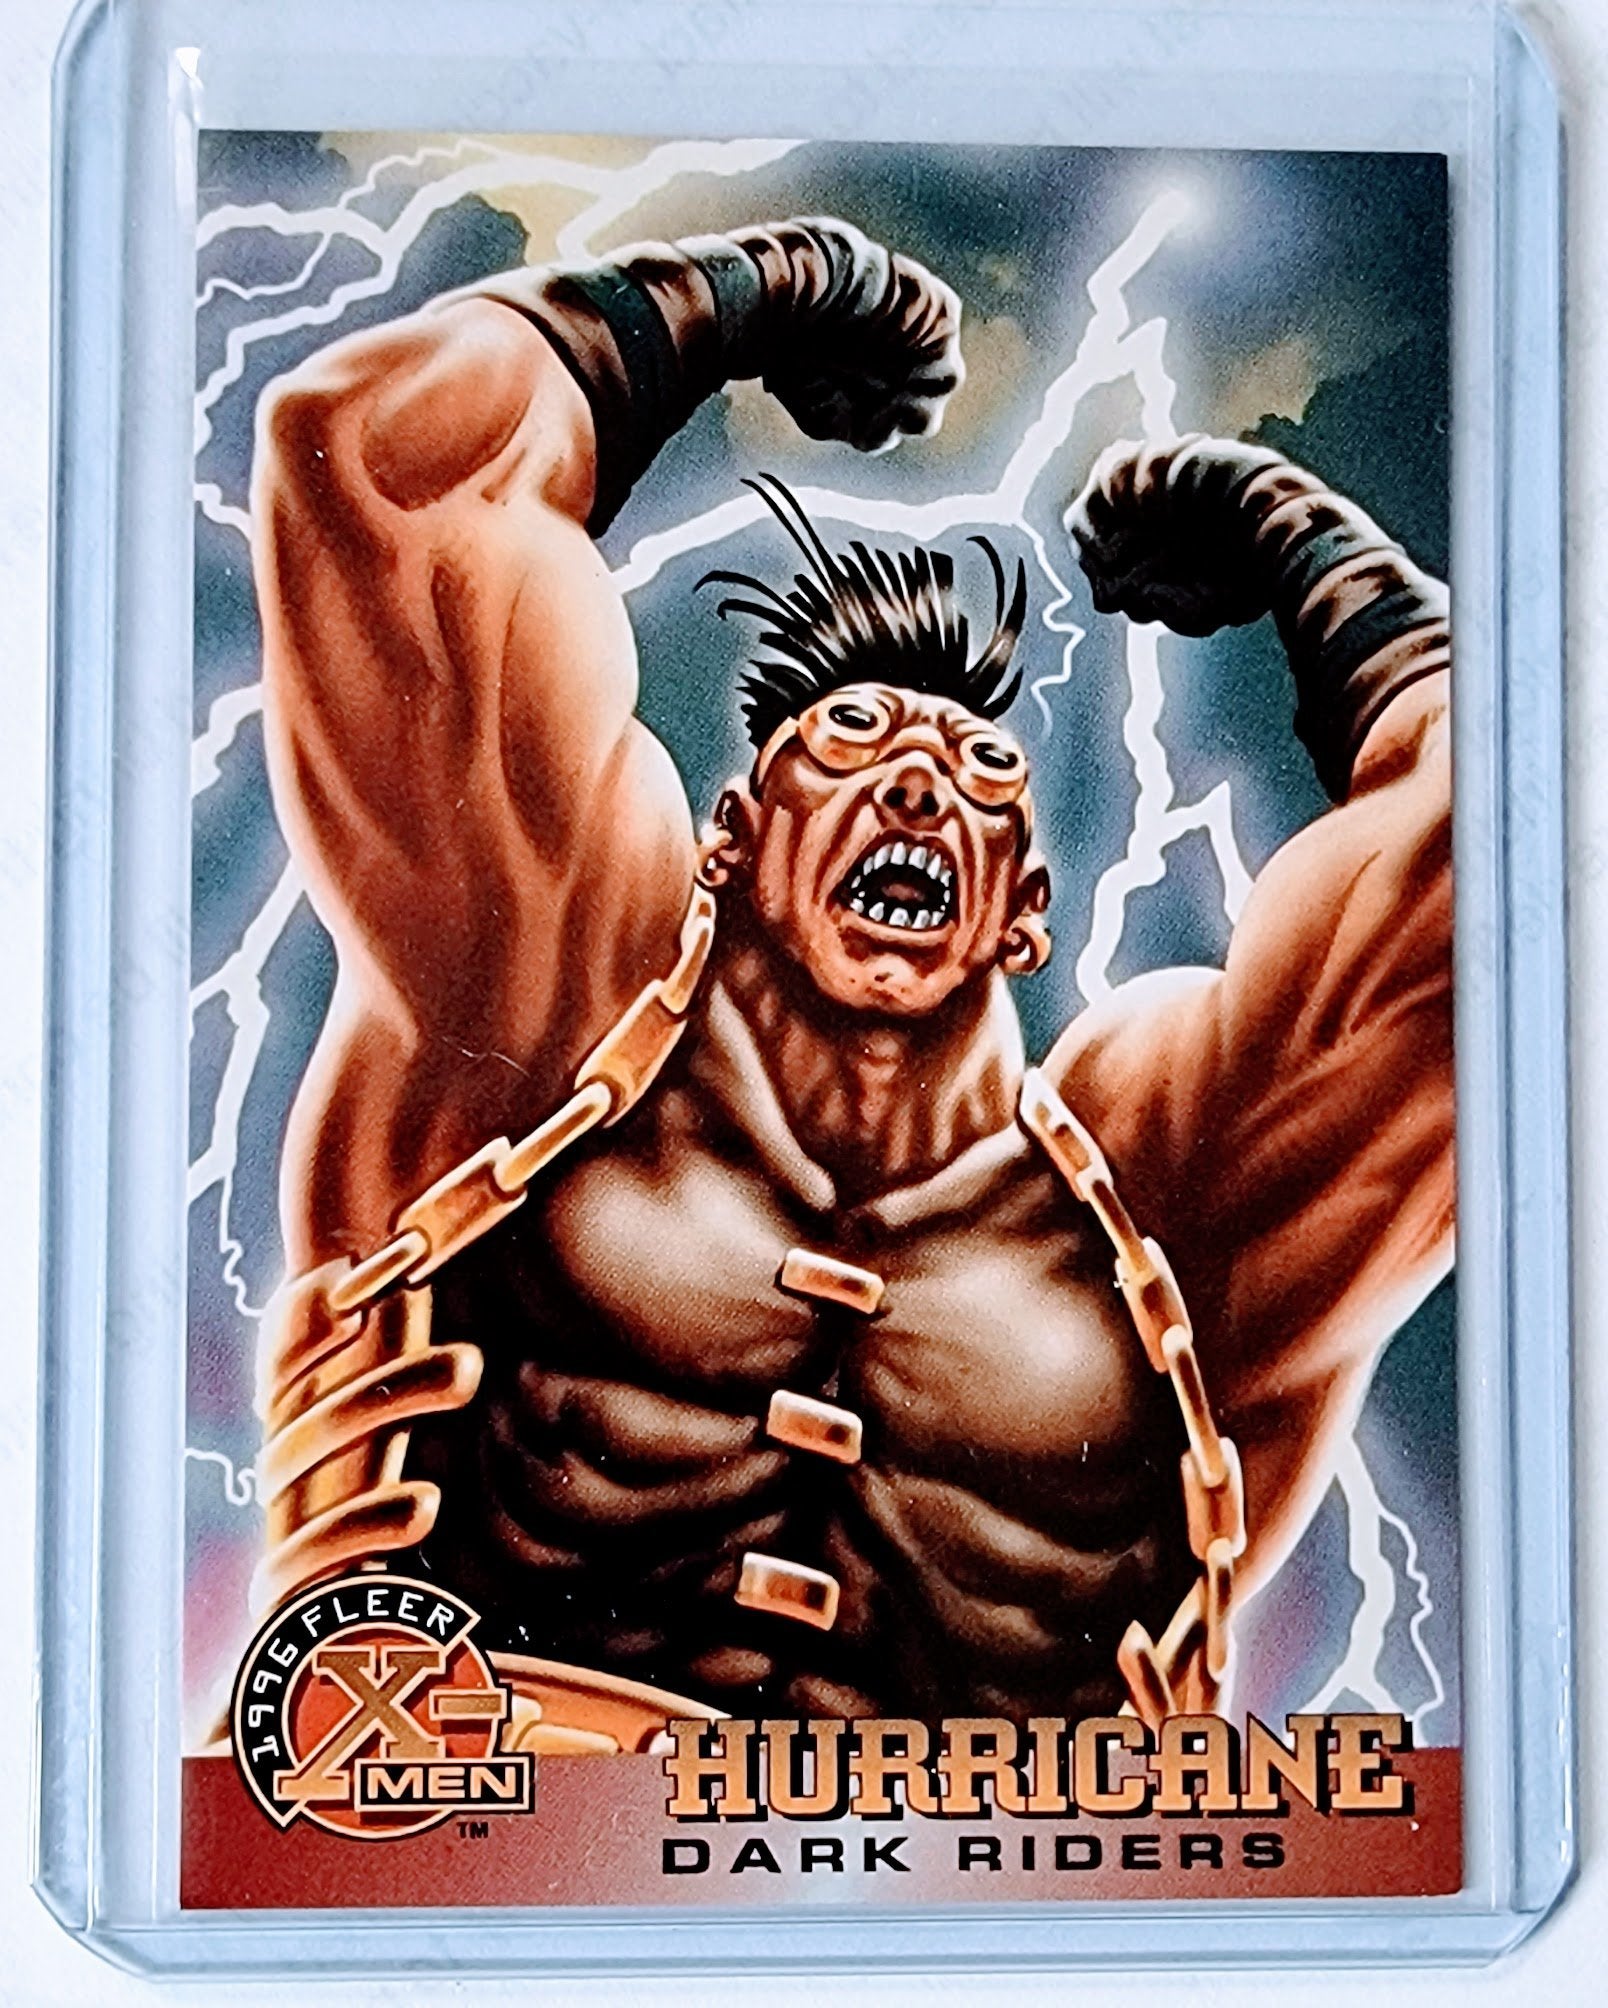 1996 Fleer X-Men Hurricane Dark Riders Marvel Trading Card GRB1 simple Xclusive Collectibles   